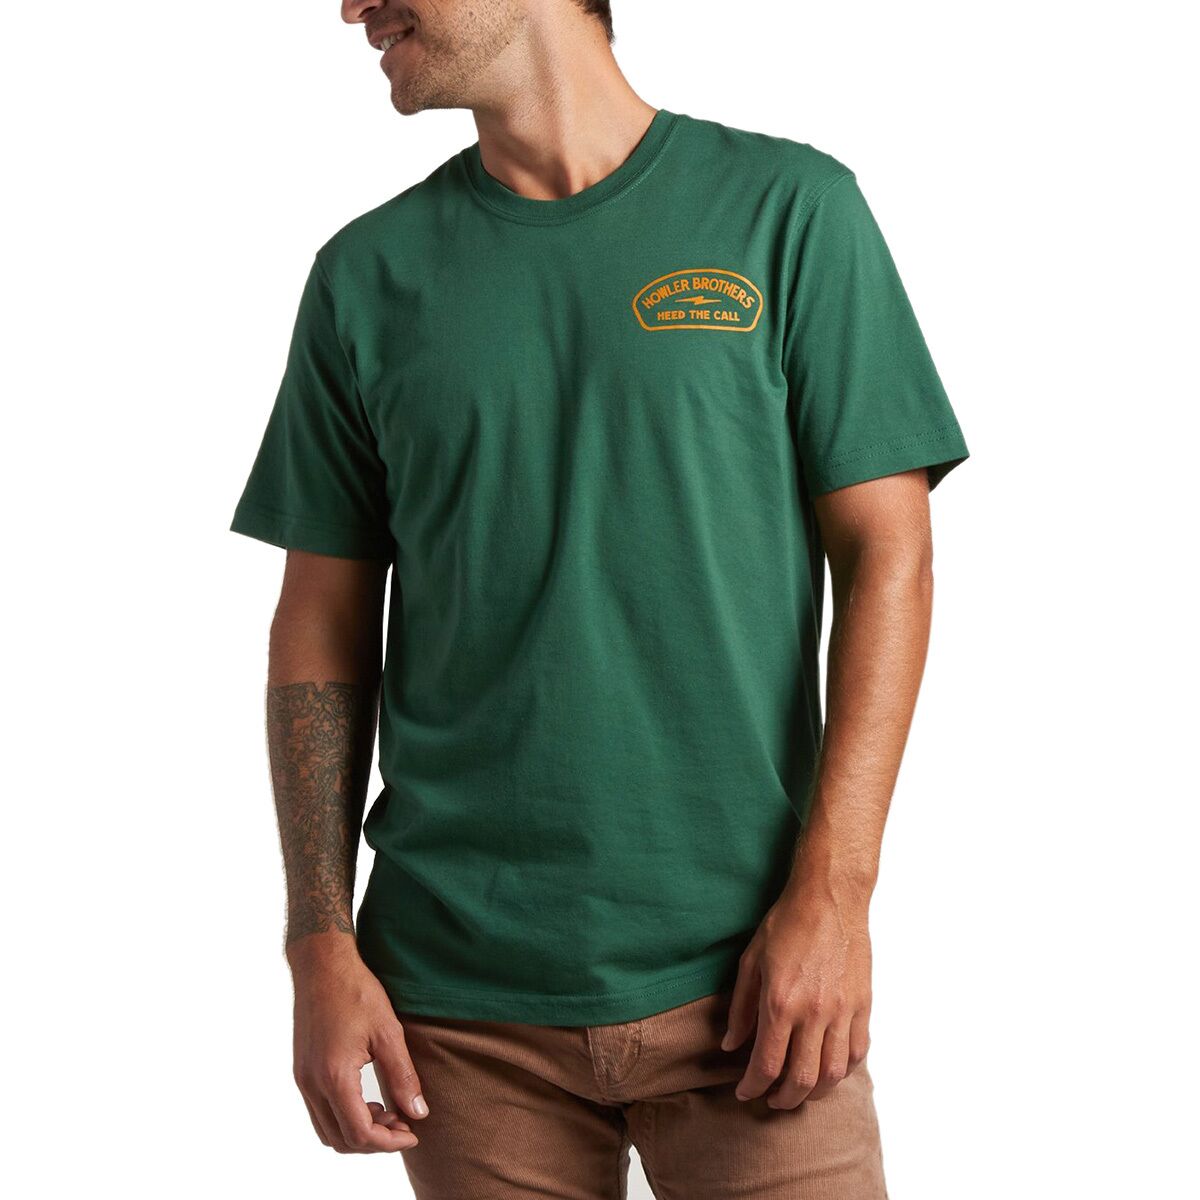 Select Pocket T-Shirt - Men